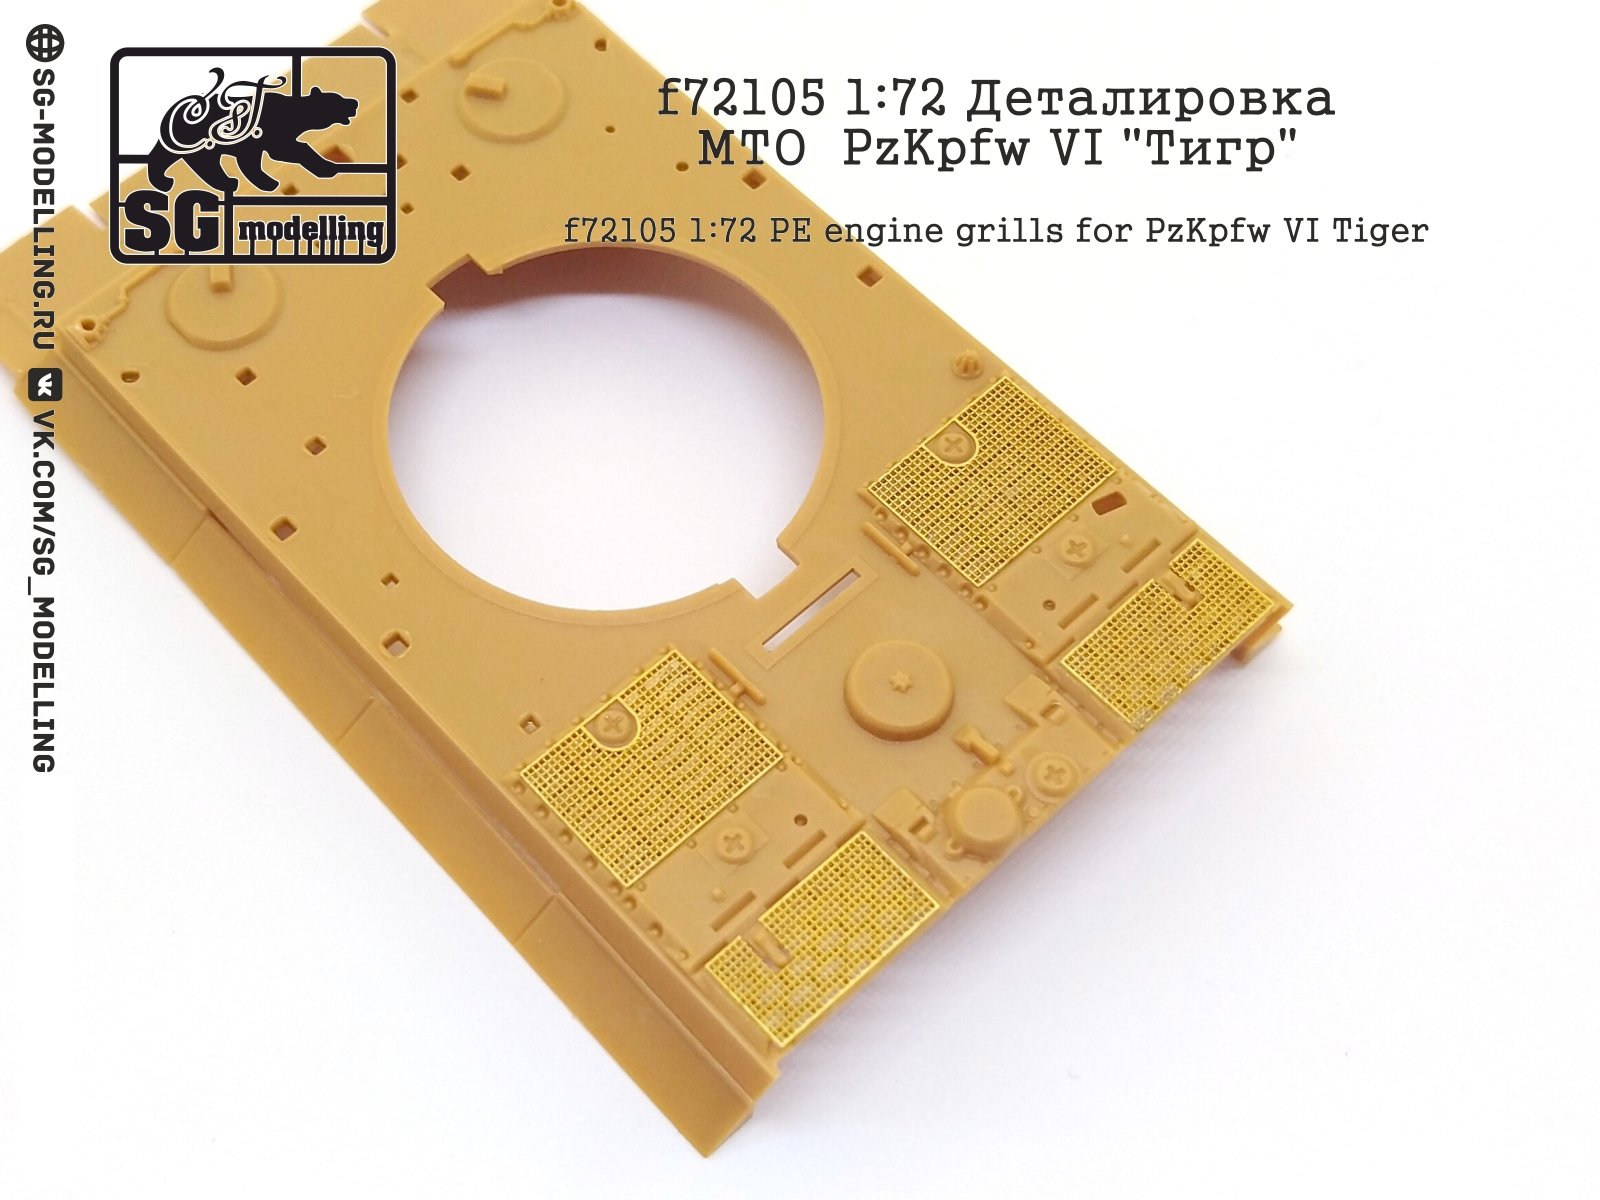 F72105 1:72 Detailing MTO PZKPFW VI "Tiger" (FTD) - imodeller.store